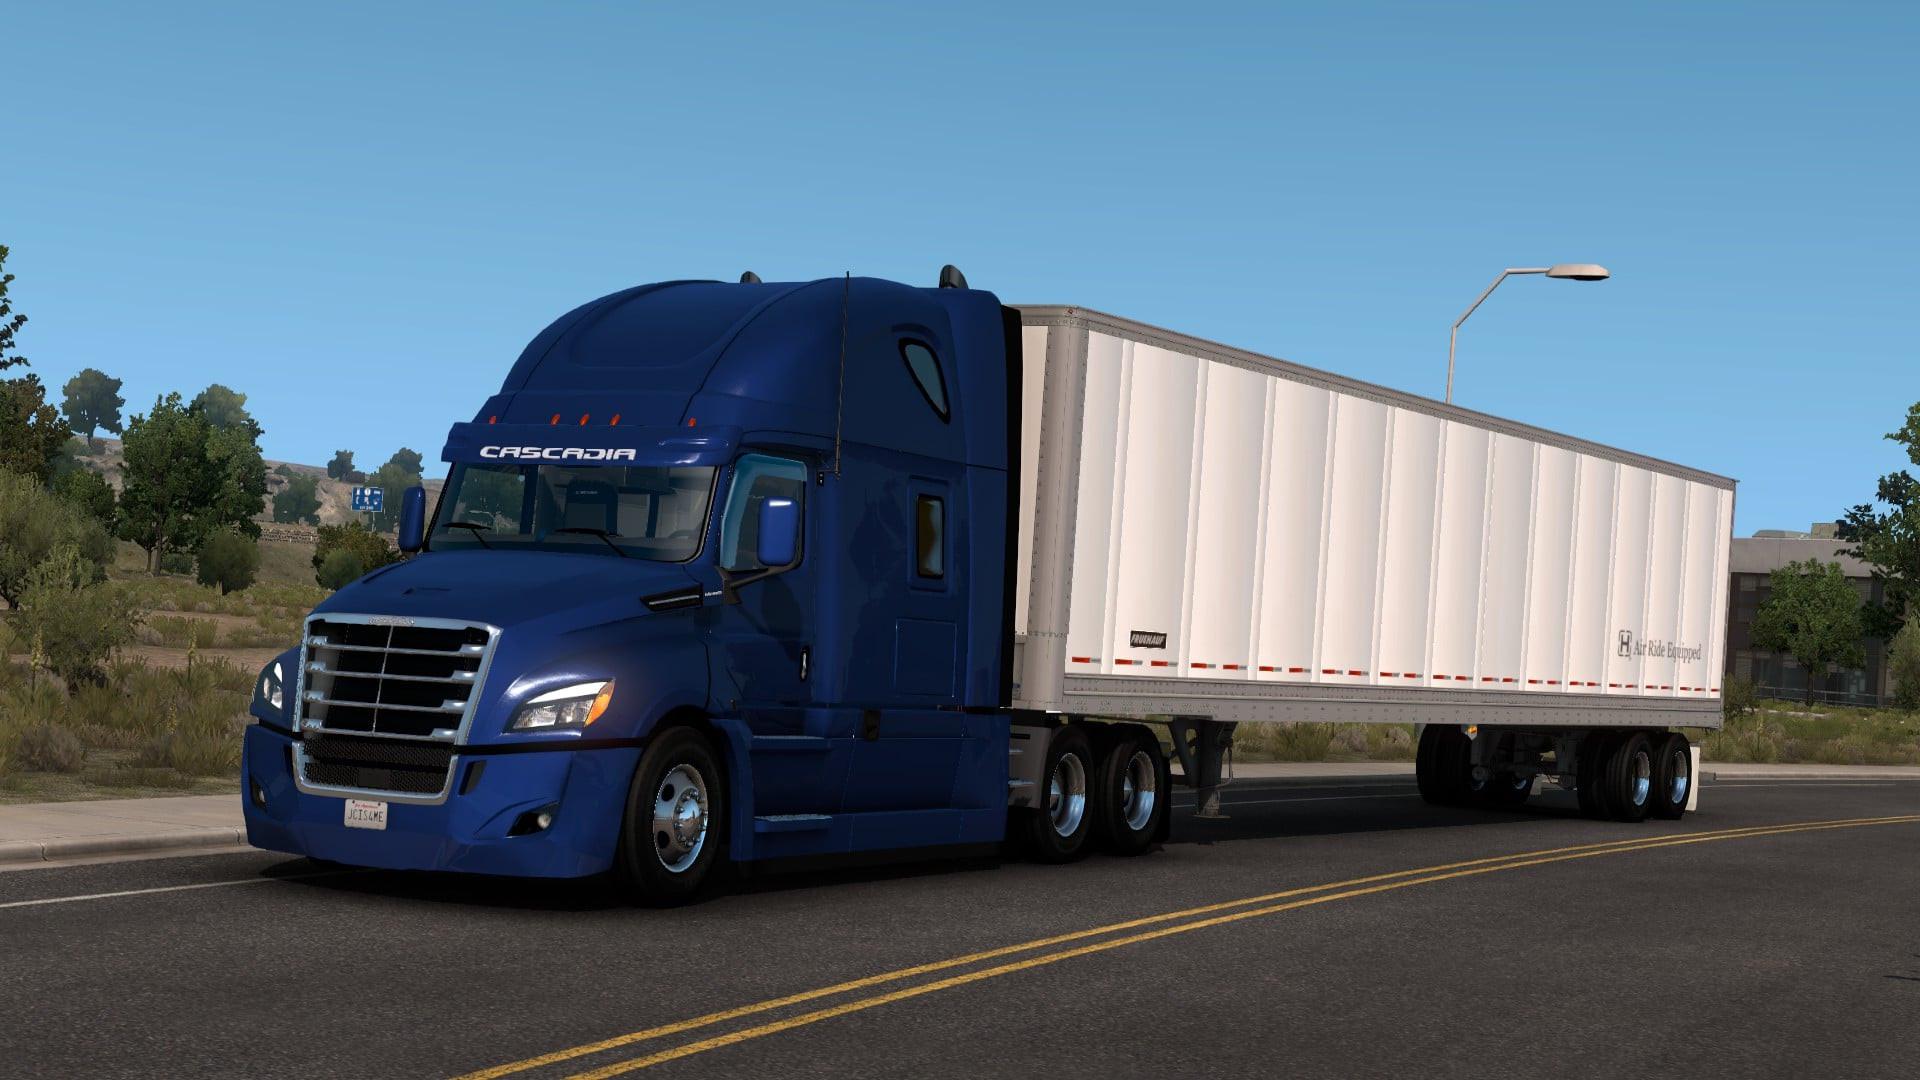 Ats The Fruehauf Box Trailer Ownable 138x American Truck Simulator Modsclub